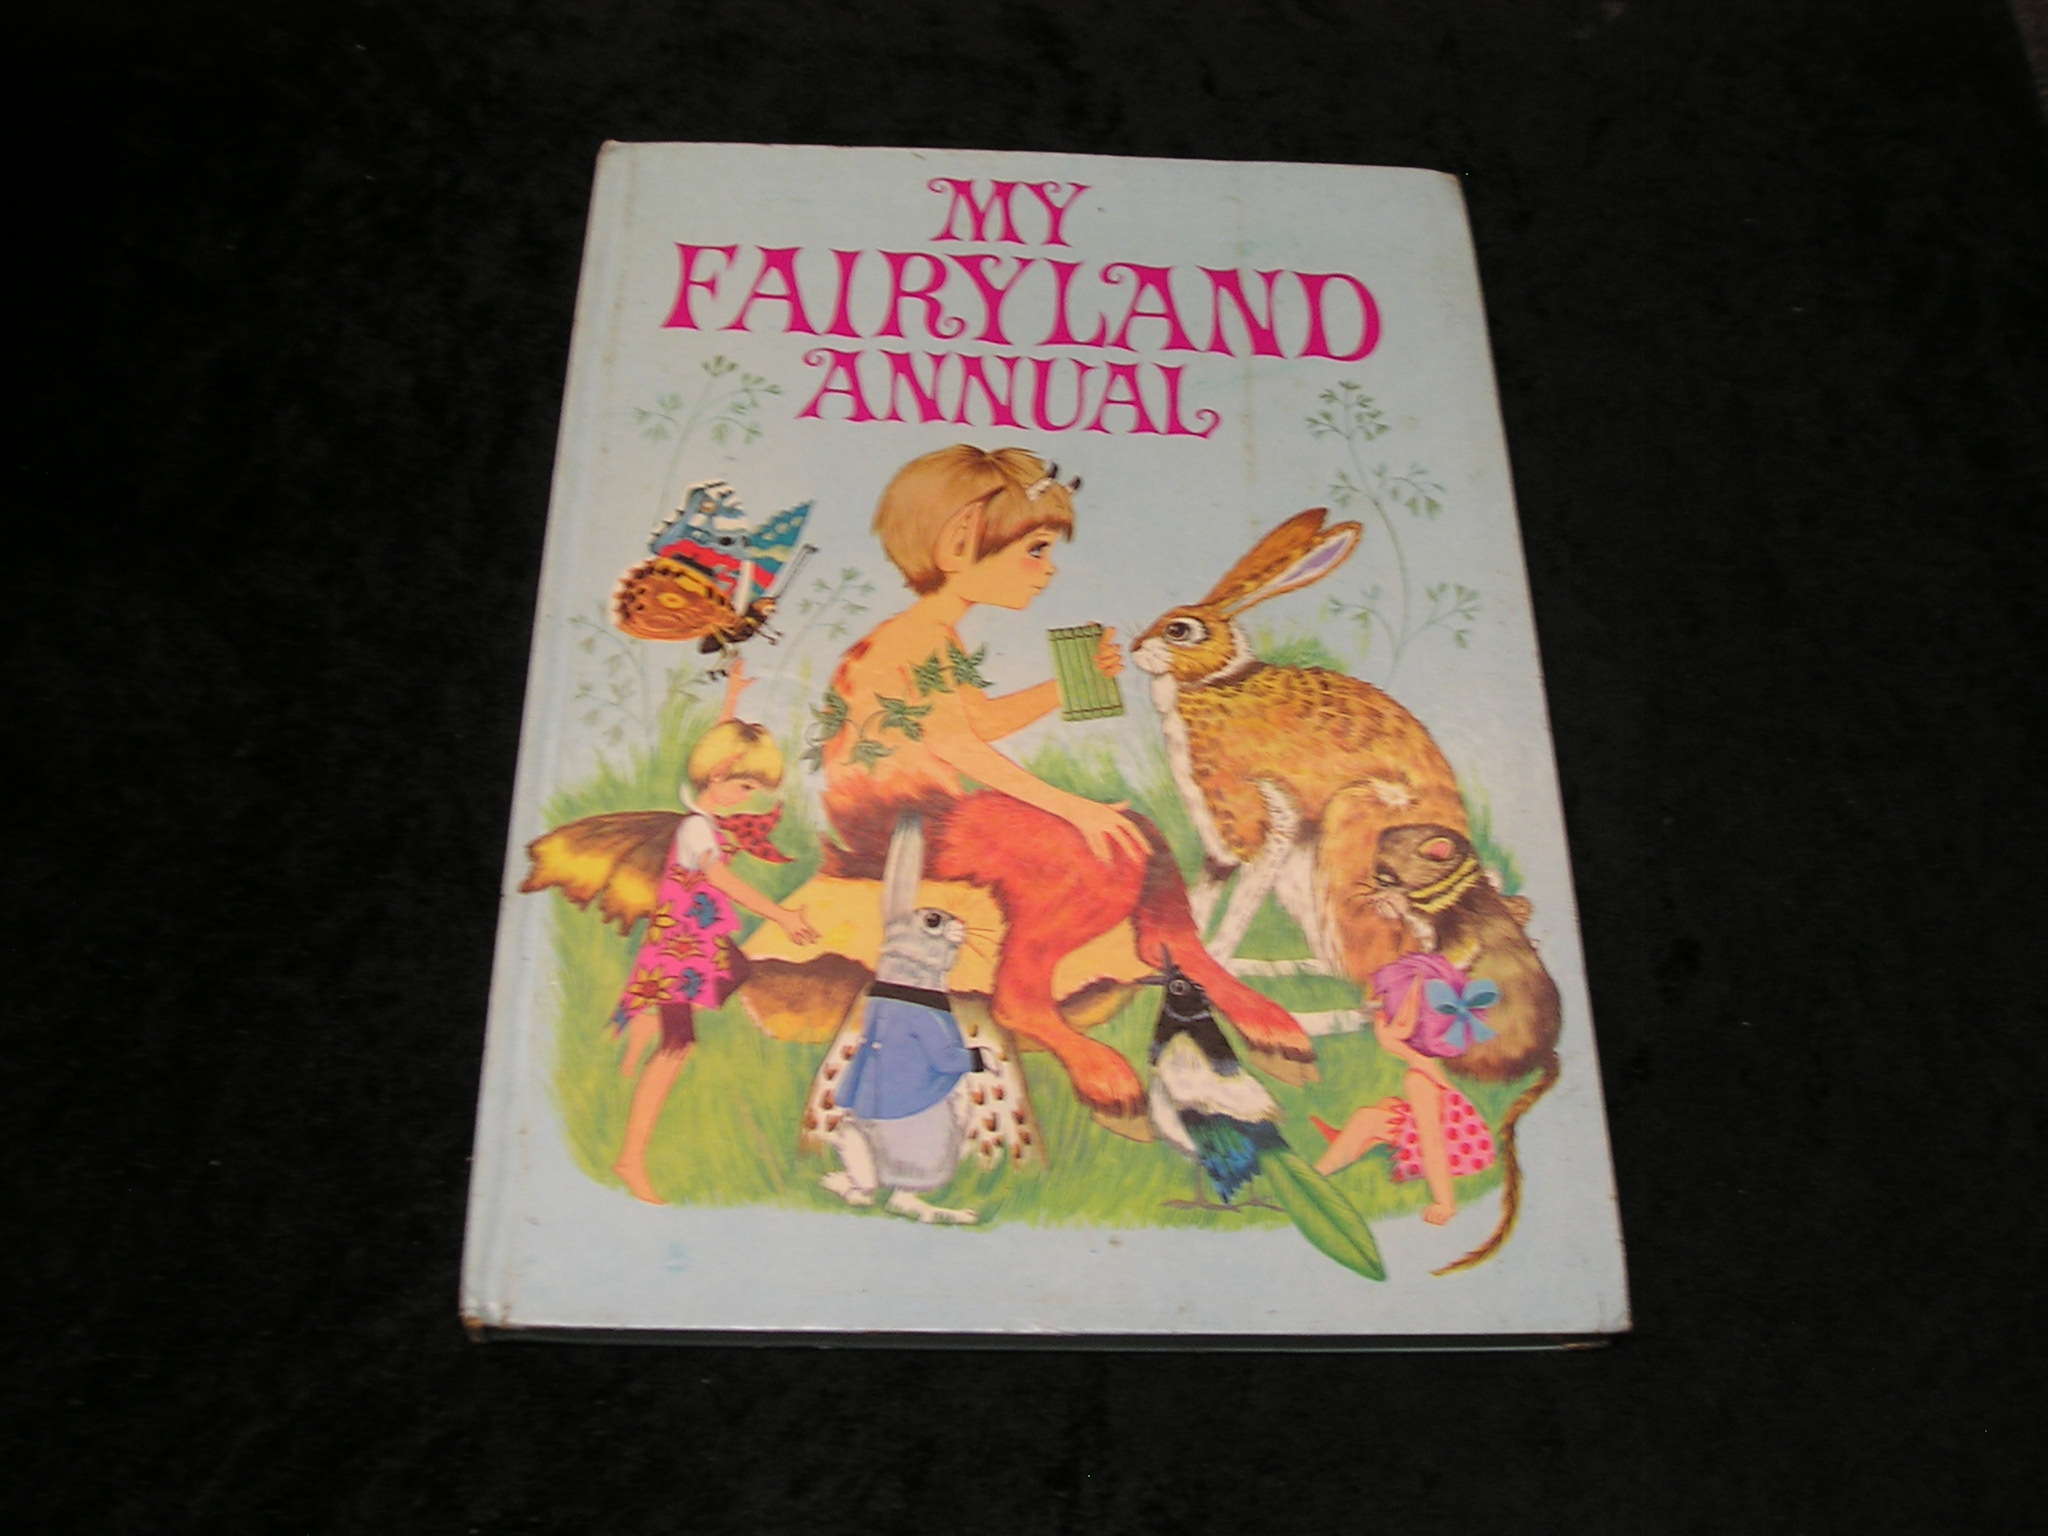 My Fairyland Annual